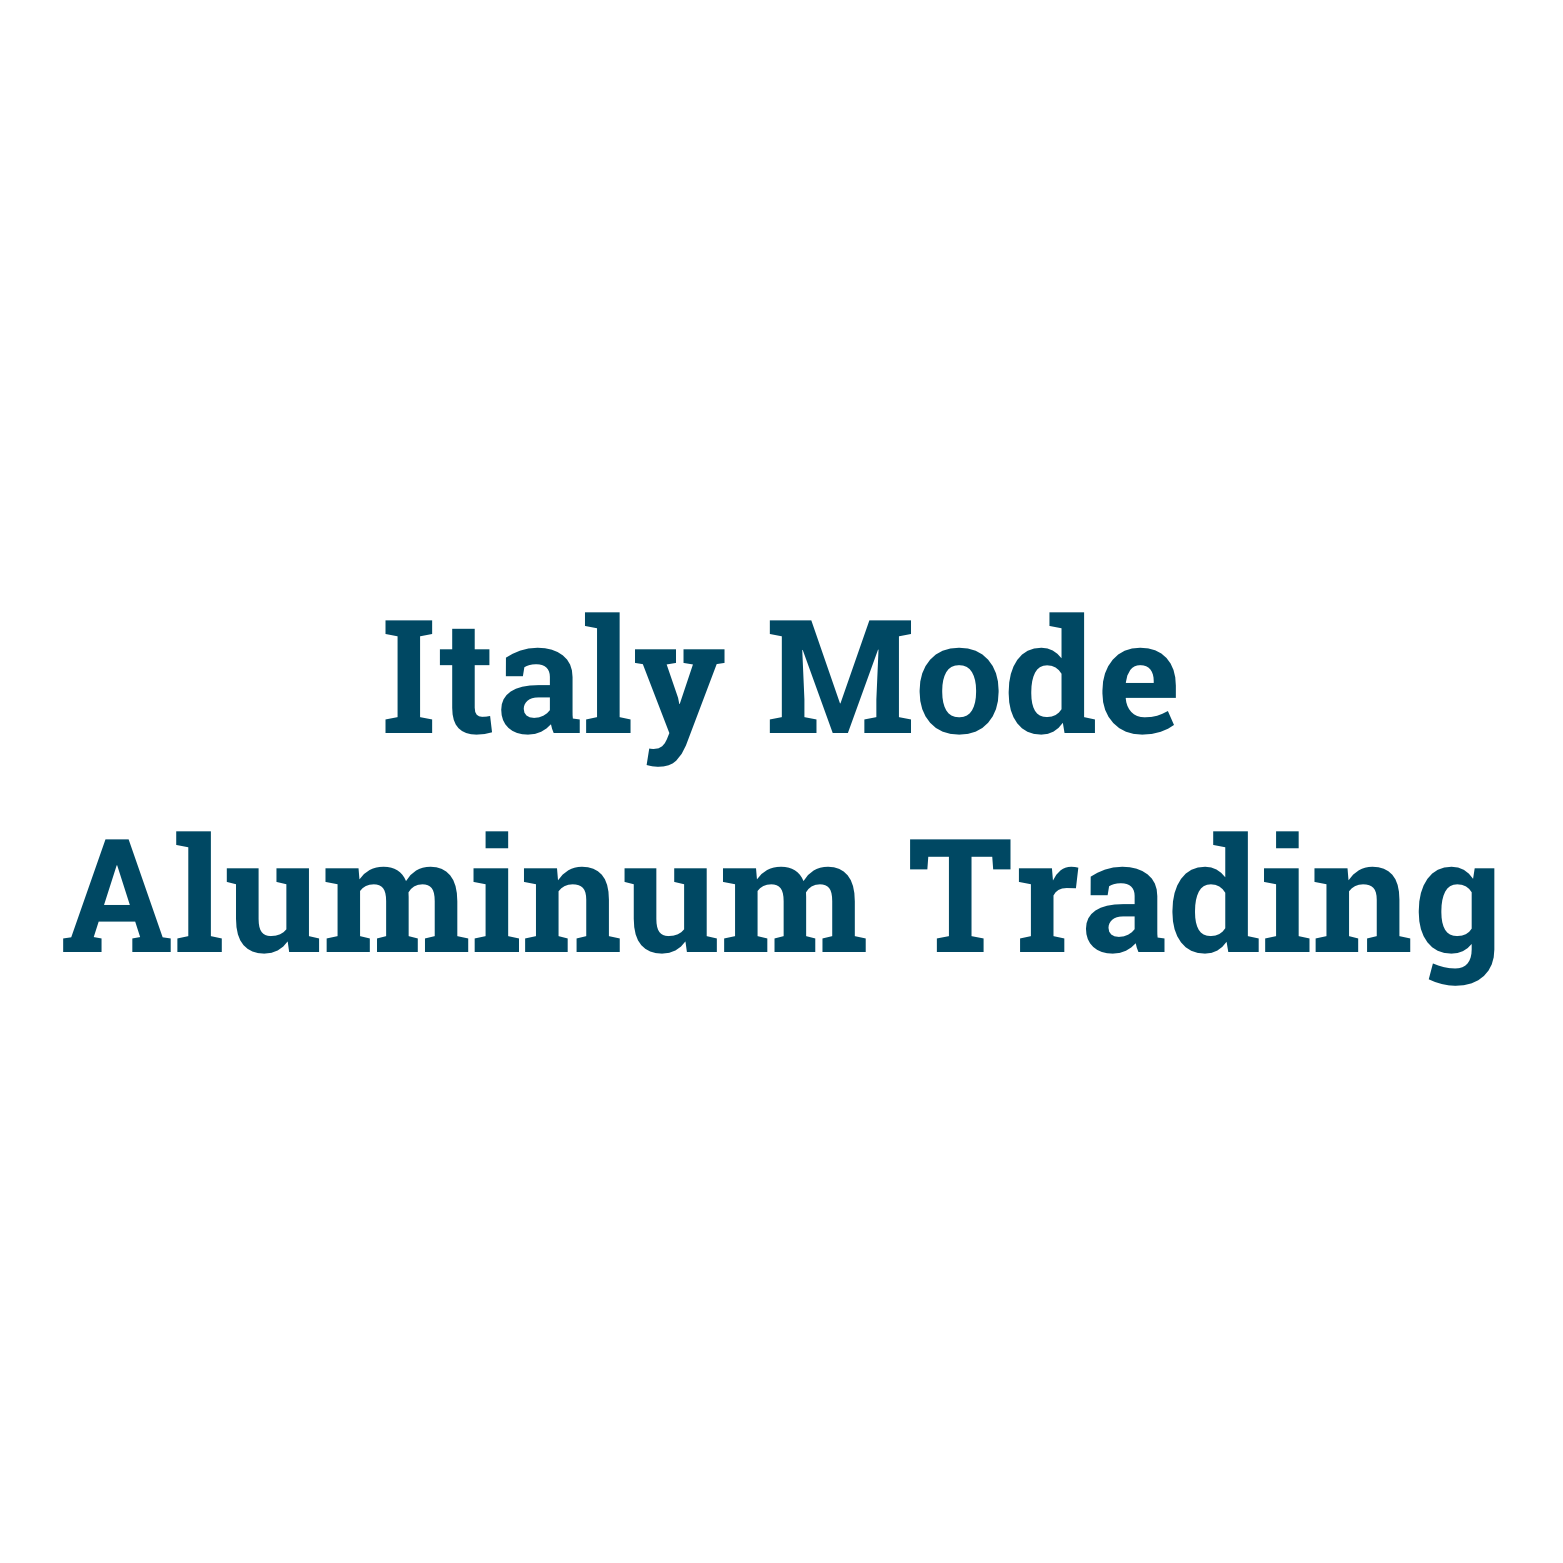 Italy Mode Aluminum Trading